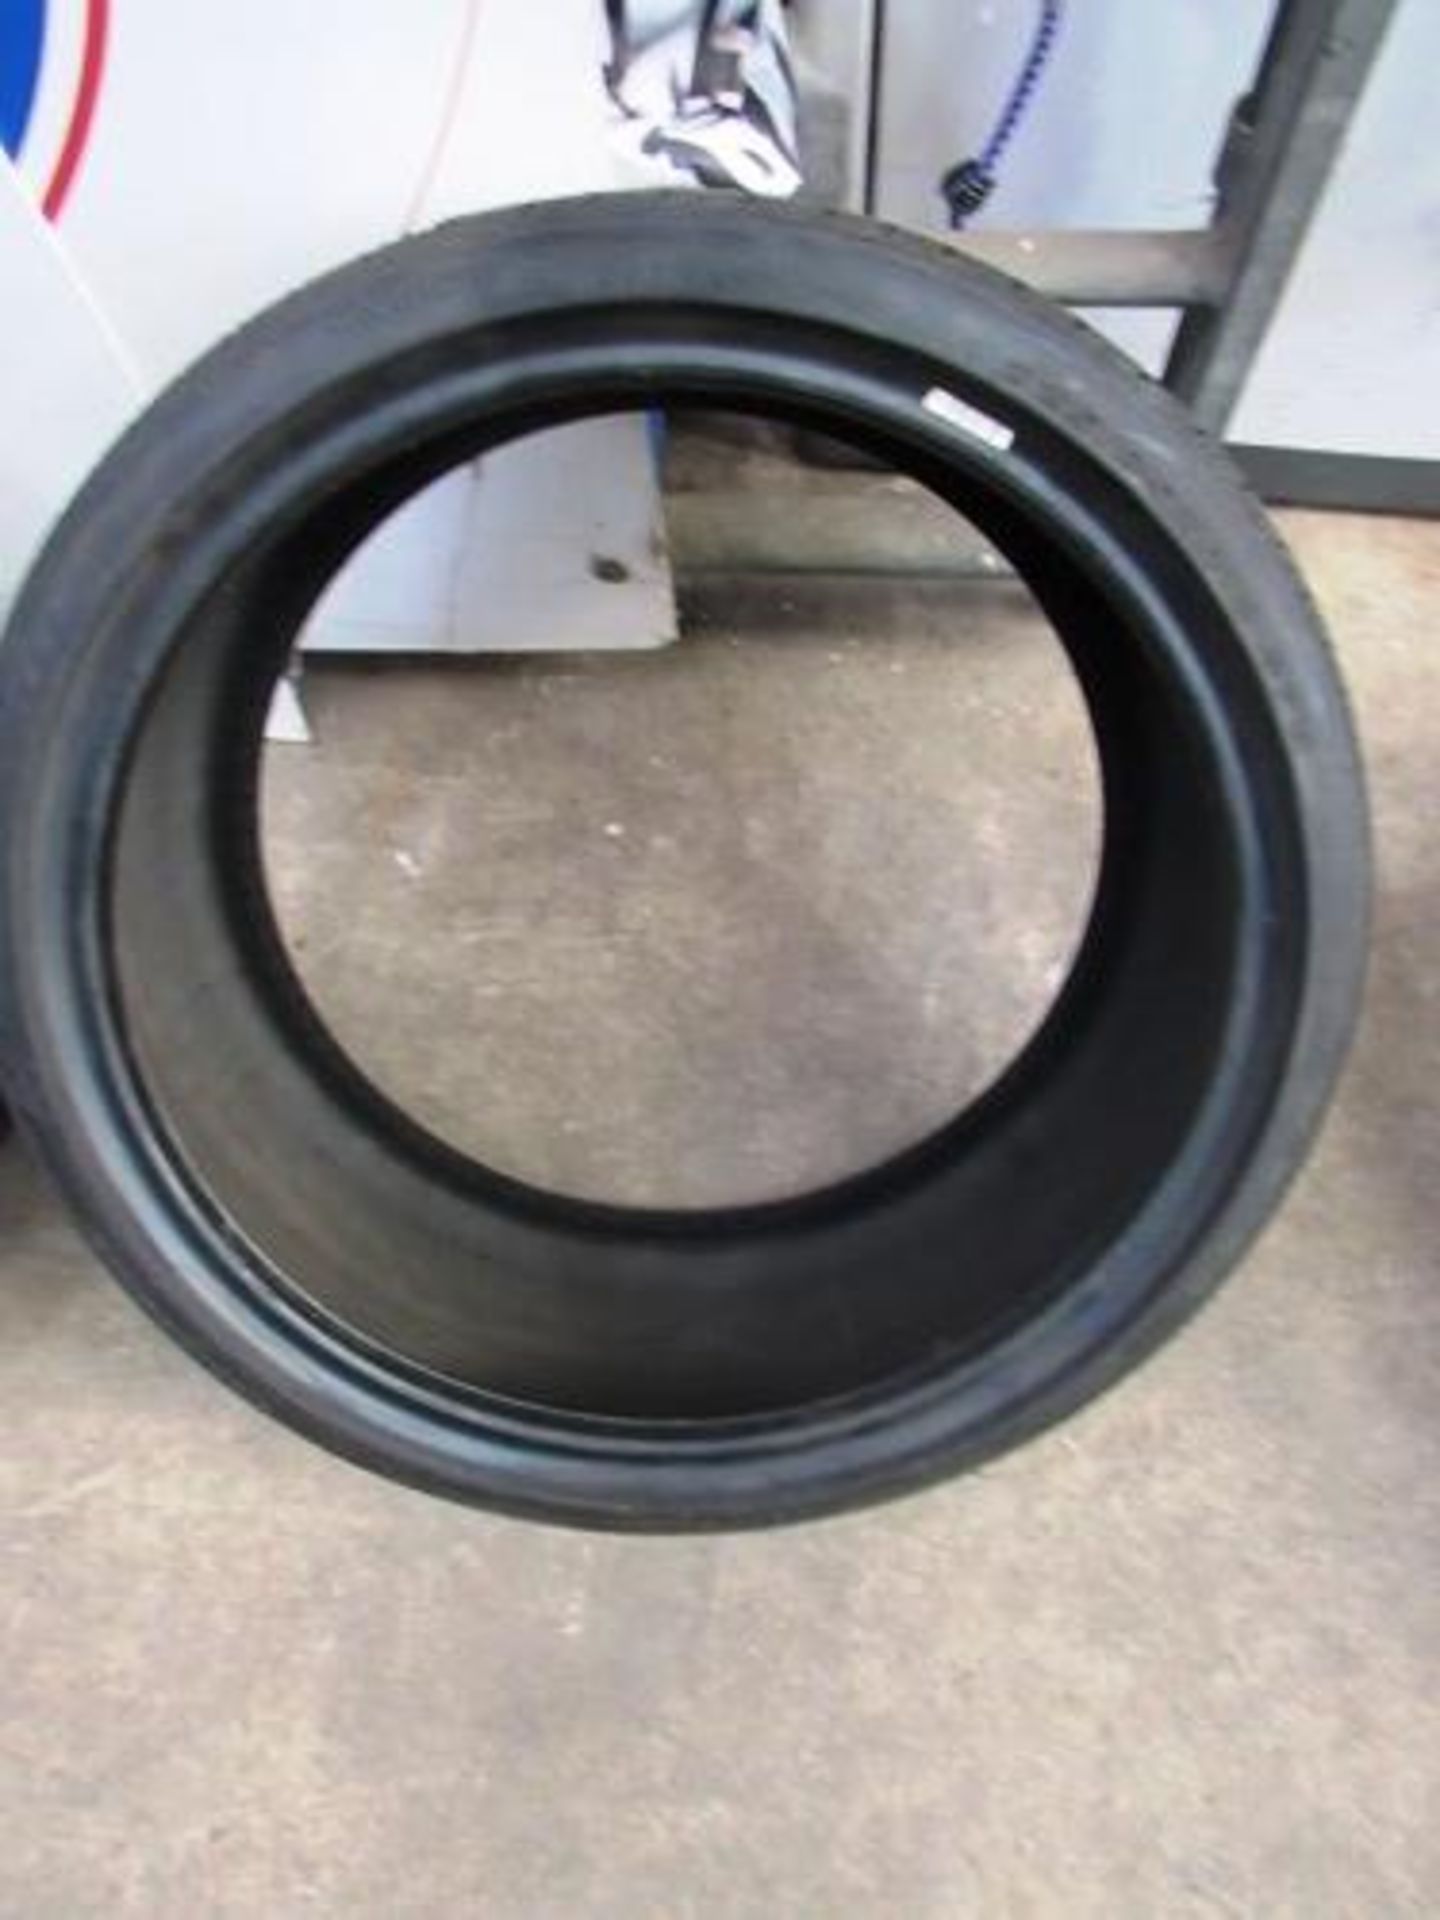 1 x Nexen N Fera SU1 tyre, size 225/35ZR18 87Y XL - New with label (GS2) - Image 2 of 2